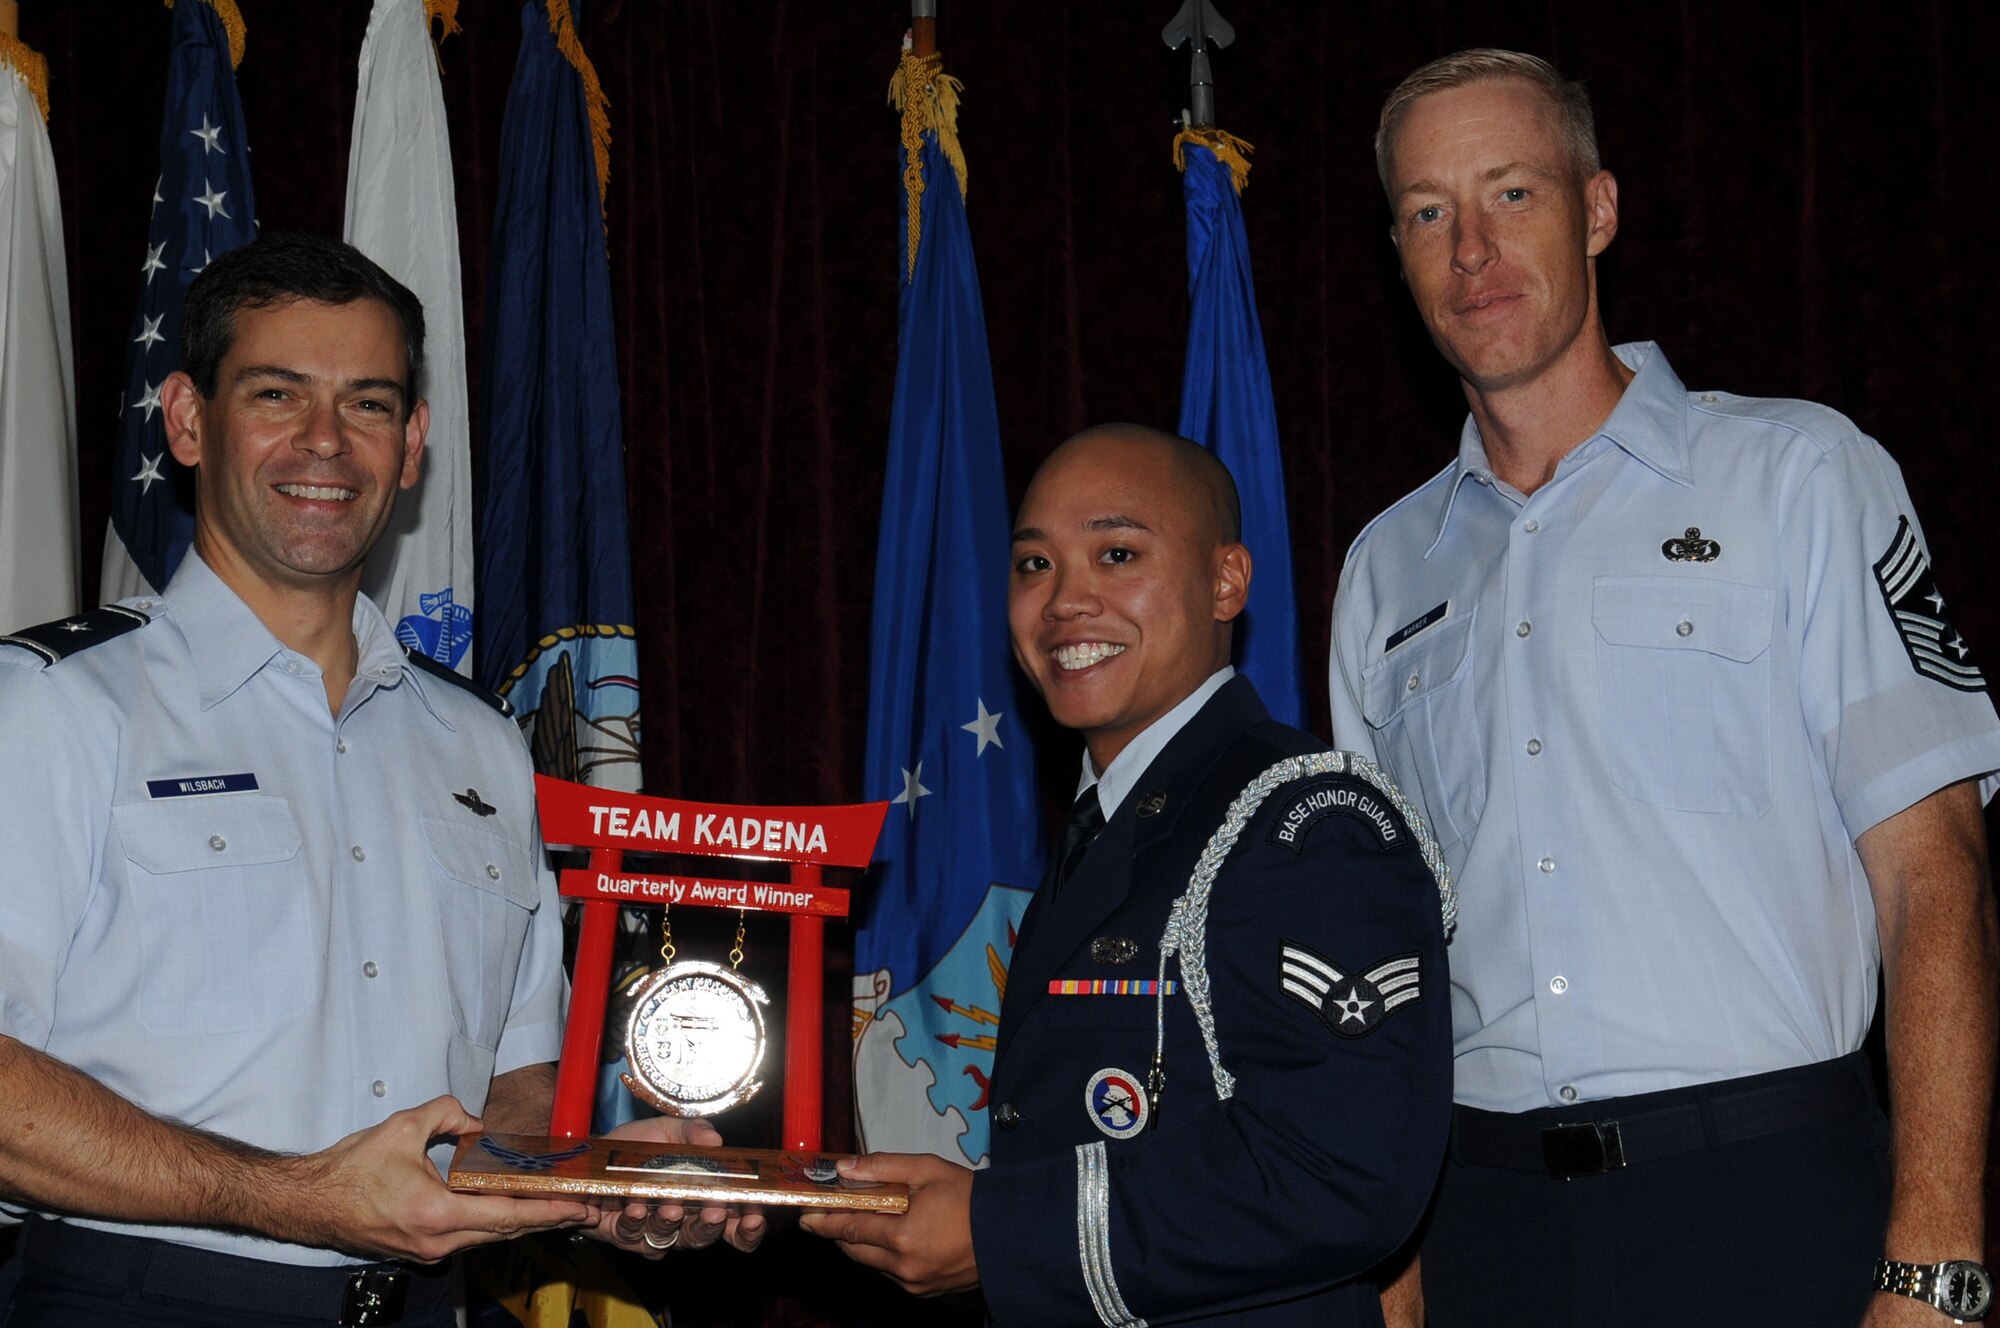 Senior Airman Mark Pillarda, 18th Communications Squadron, was named the Team Kadena Honor Guard Airman of the Quarter.